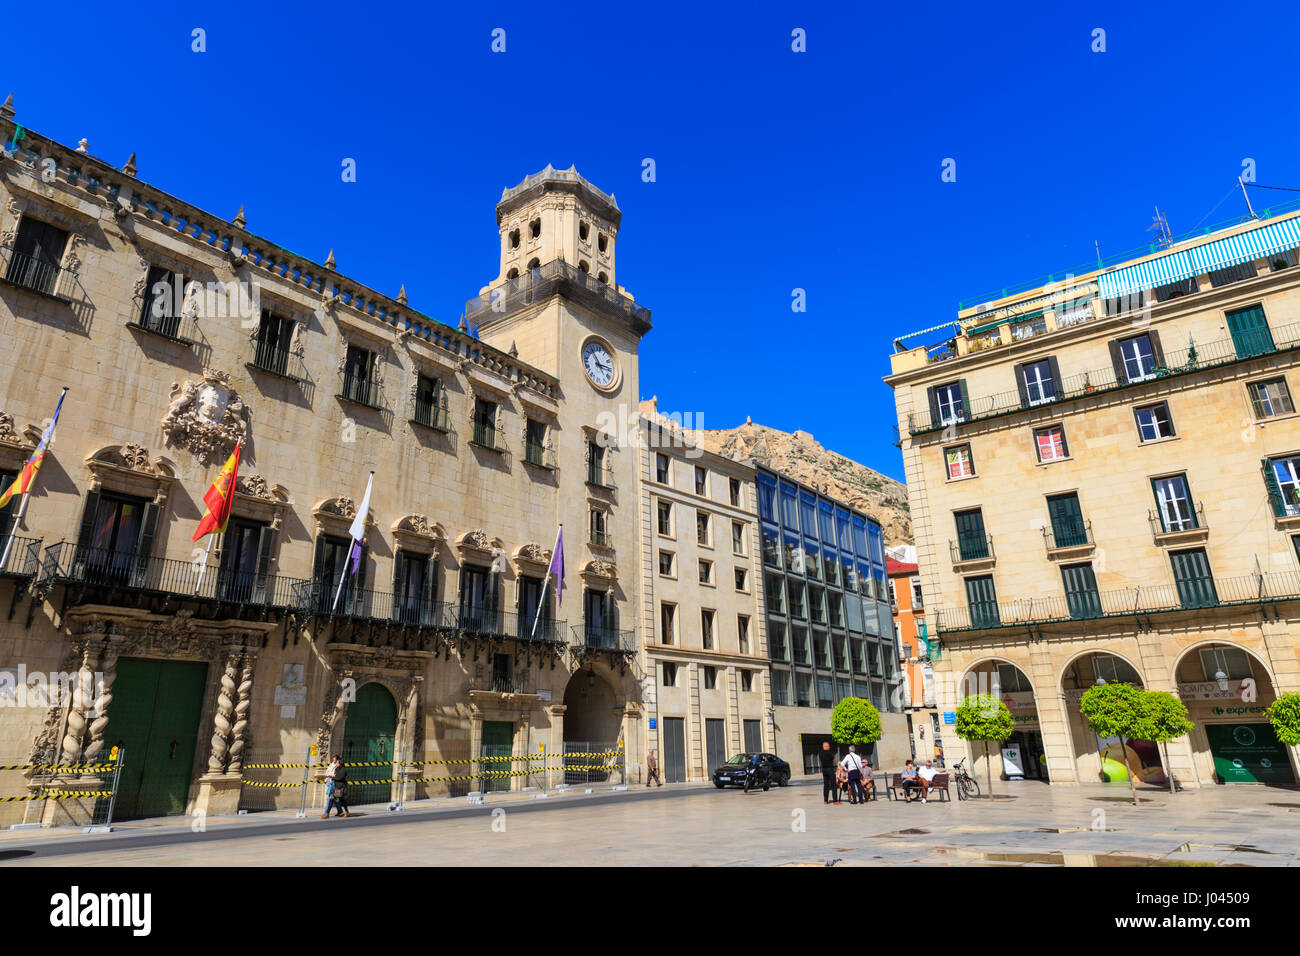 Alicante town fotografías e imágenes de alta resolución - Alamy